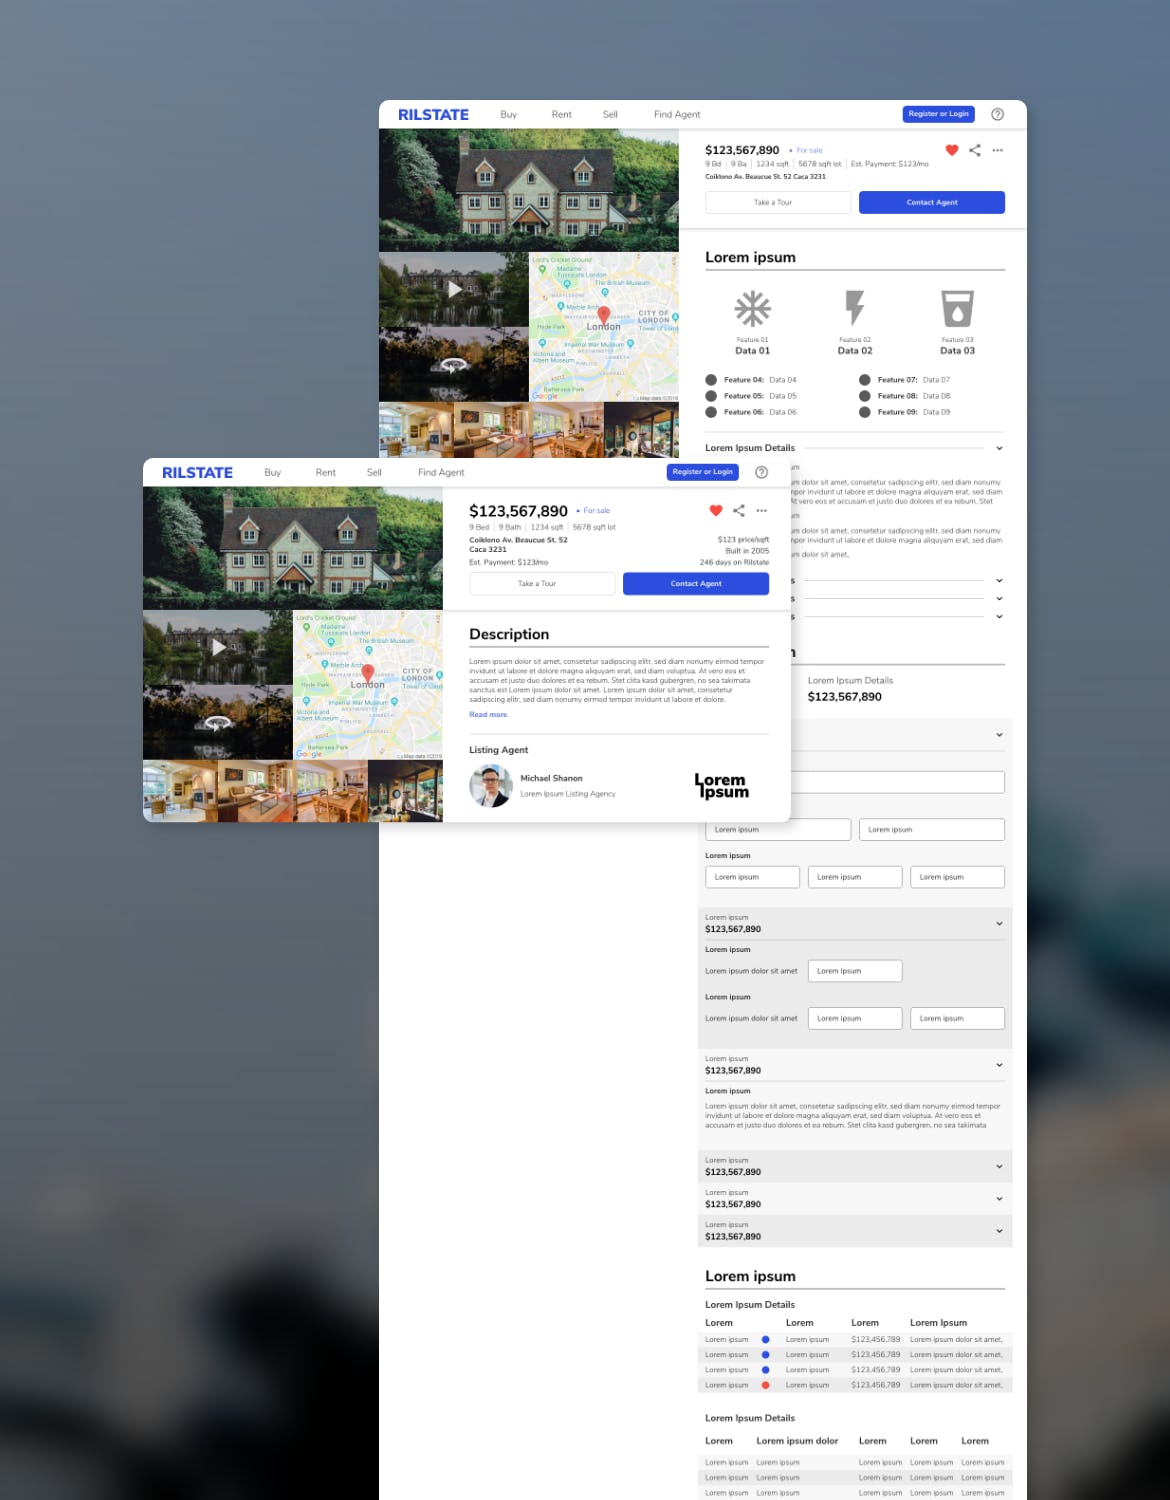 房地产租赁销售网站设计HTML模板素材中国精选 RILSTATE – Real Estate Homepage Template插图(4)